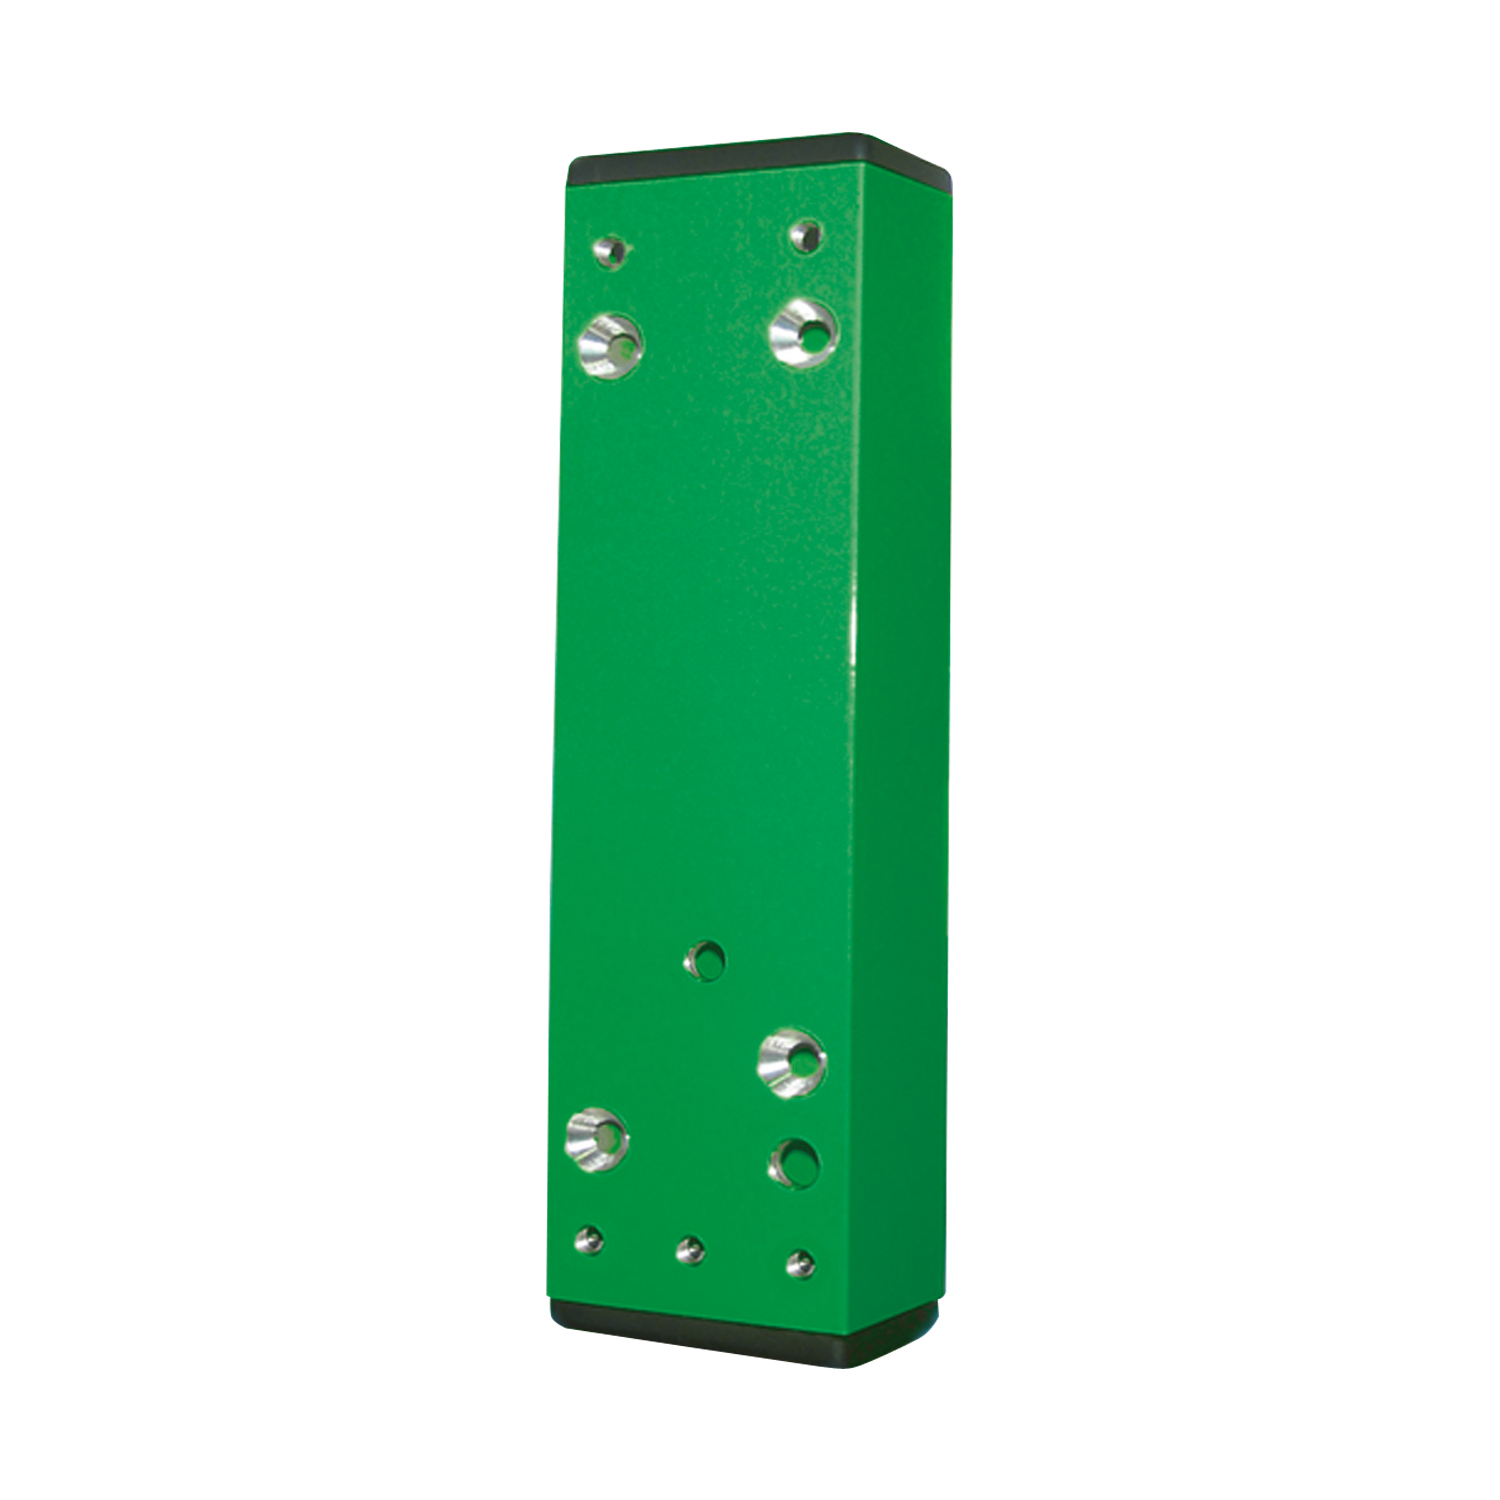 Distanzstück 30 mm für EH-Türwächter® grün (RAL 6029) lackiert, inkl. Klebepad